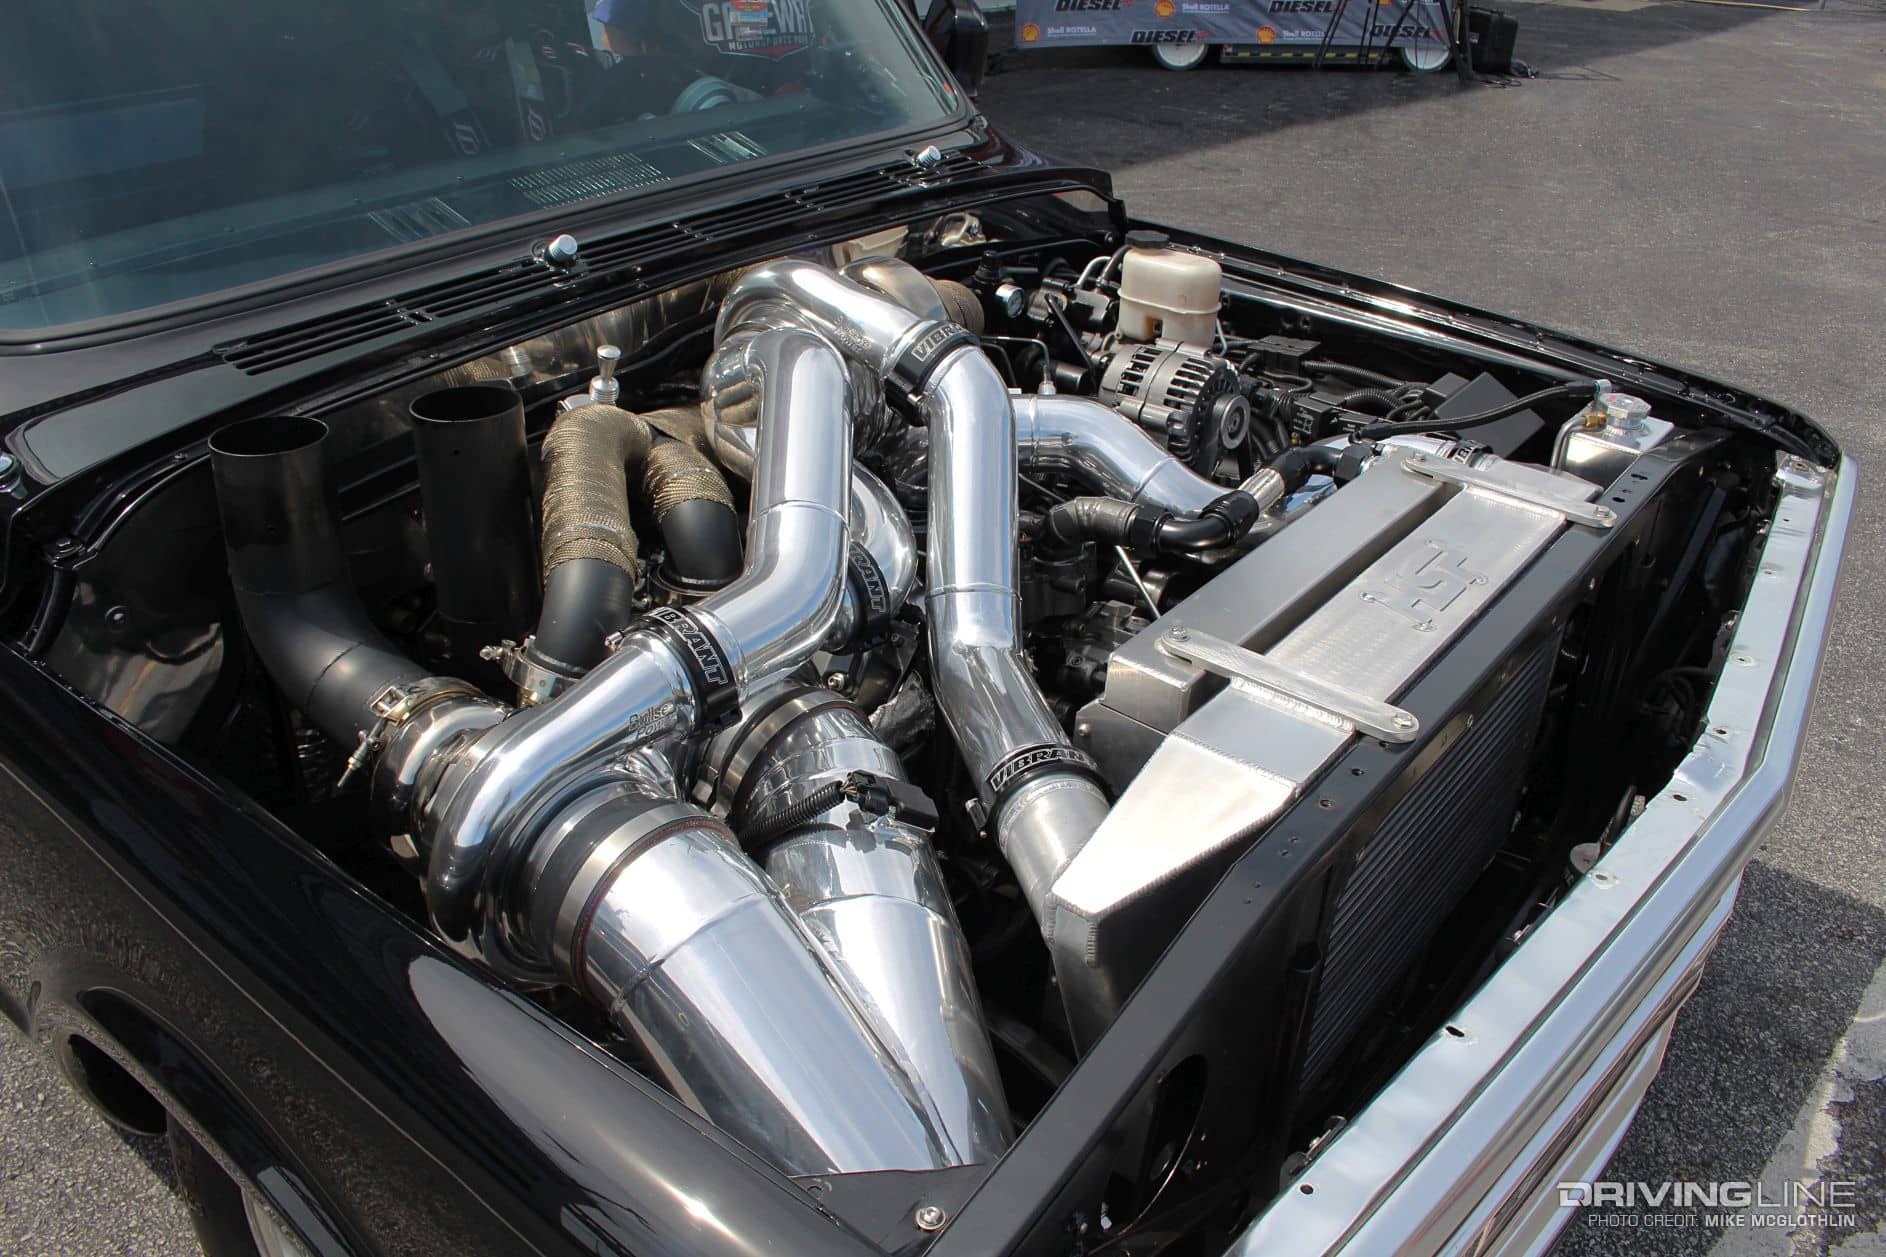 1969 Chevy C10 med en trippel turbo Duramax i motorrummet